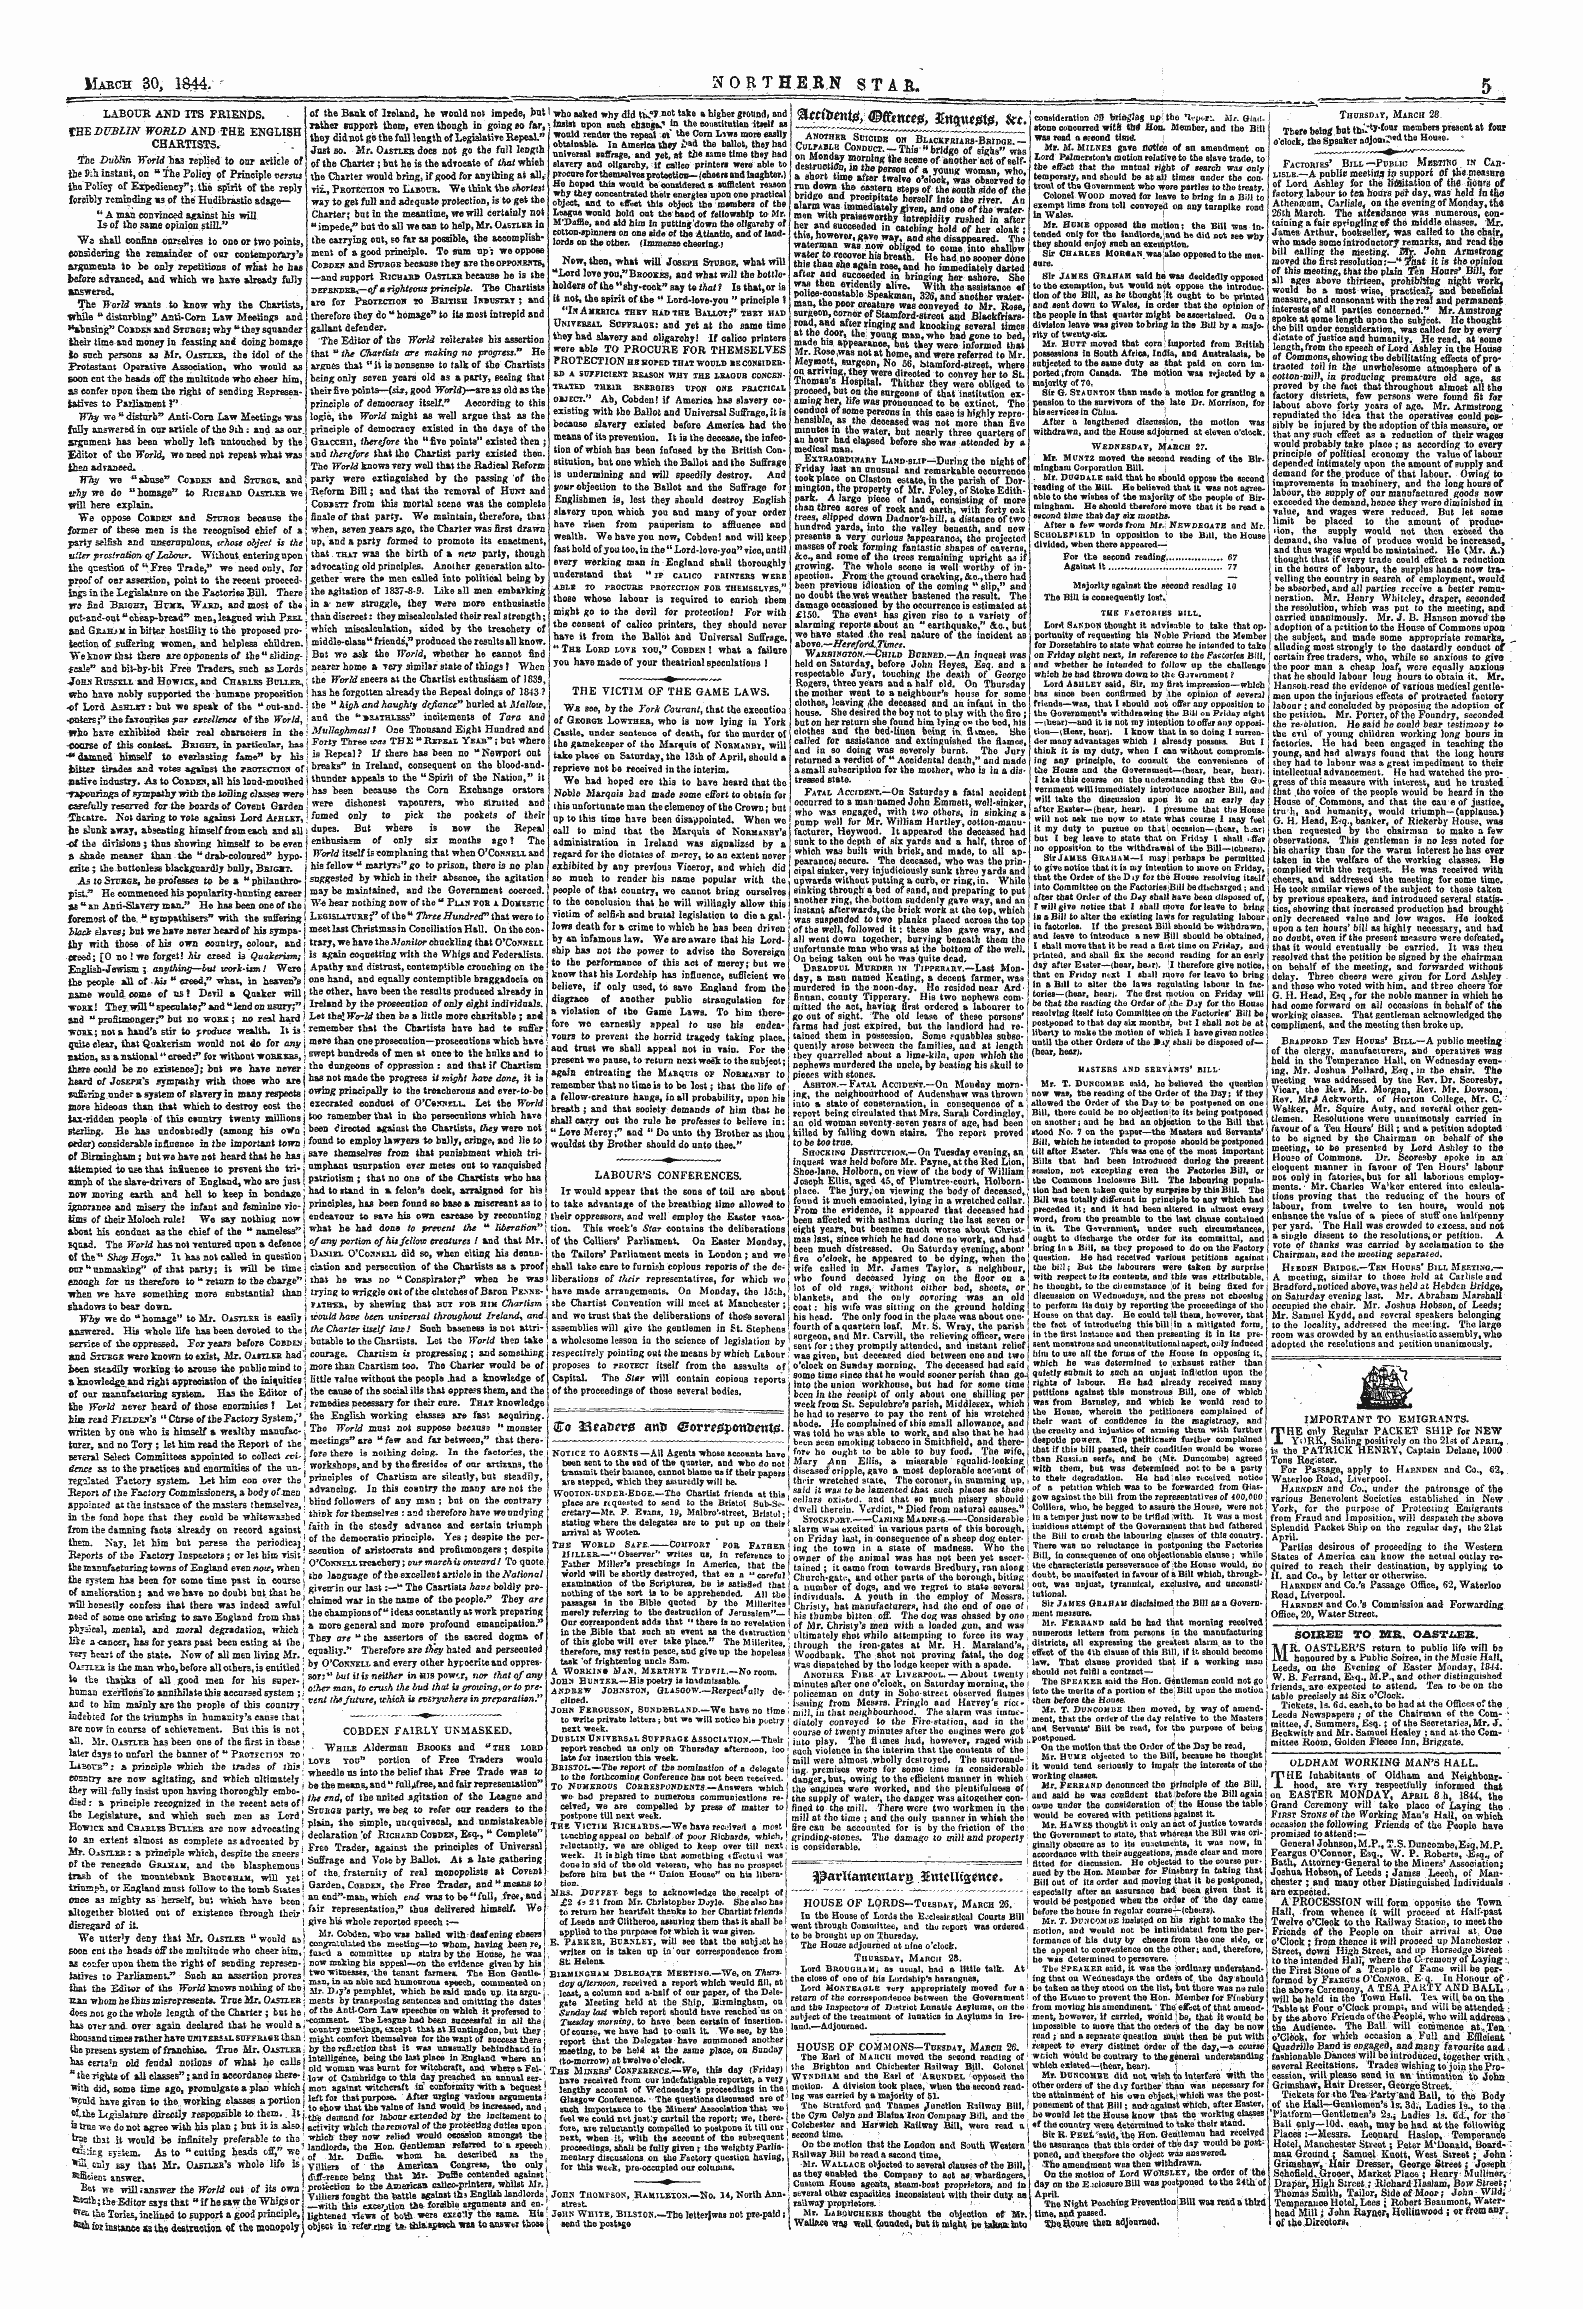 Northern Star (1837-1852): jS F Y, 1st edition - Fbo 3s*Au*T0 Anb (Sorvefymttexttes.